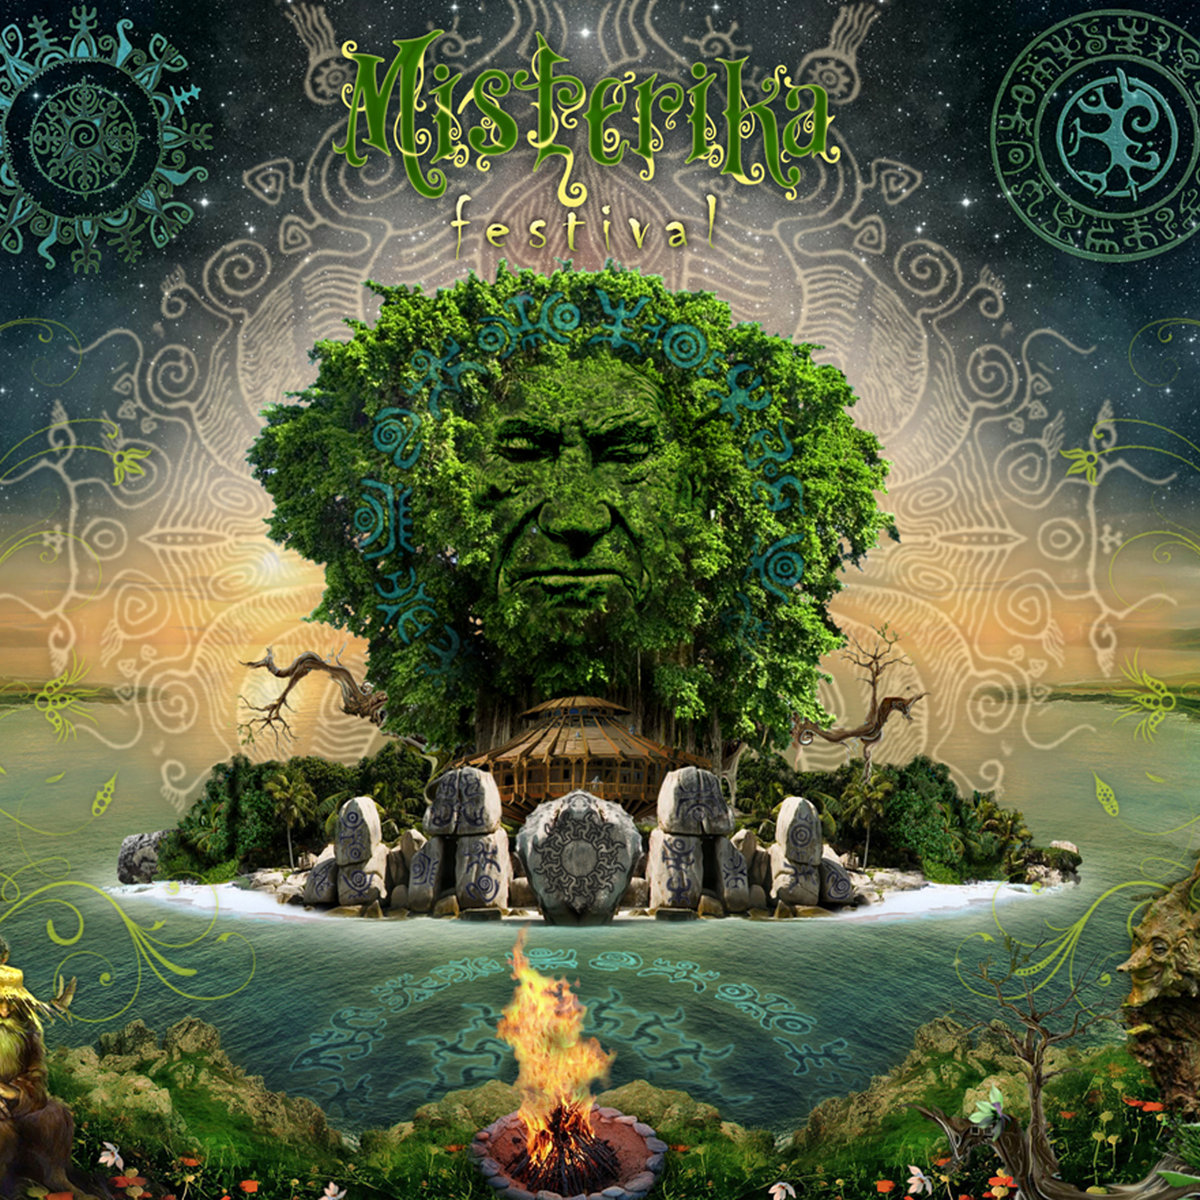 Vishuddha - Mono @ 'Various Artists - Misterika festival – Tree of the Life Pt.1' album (ambient, electronic)